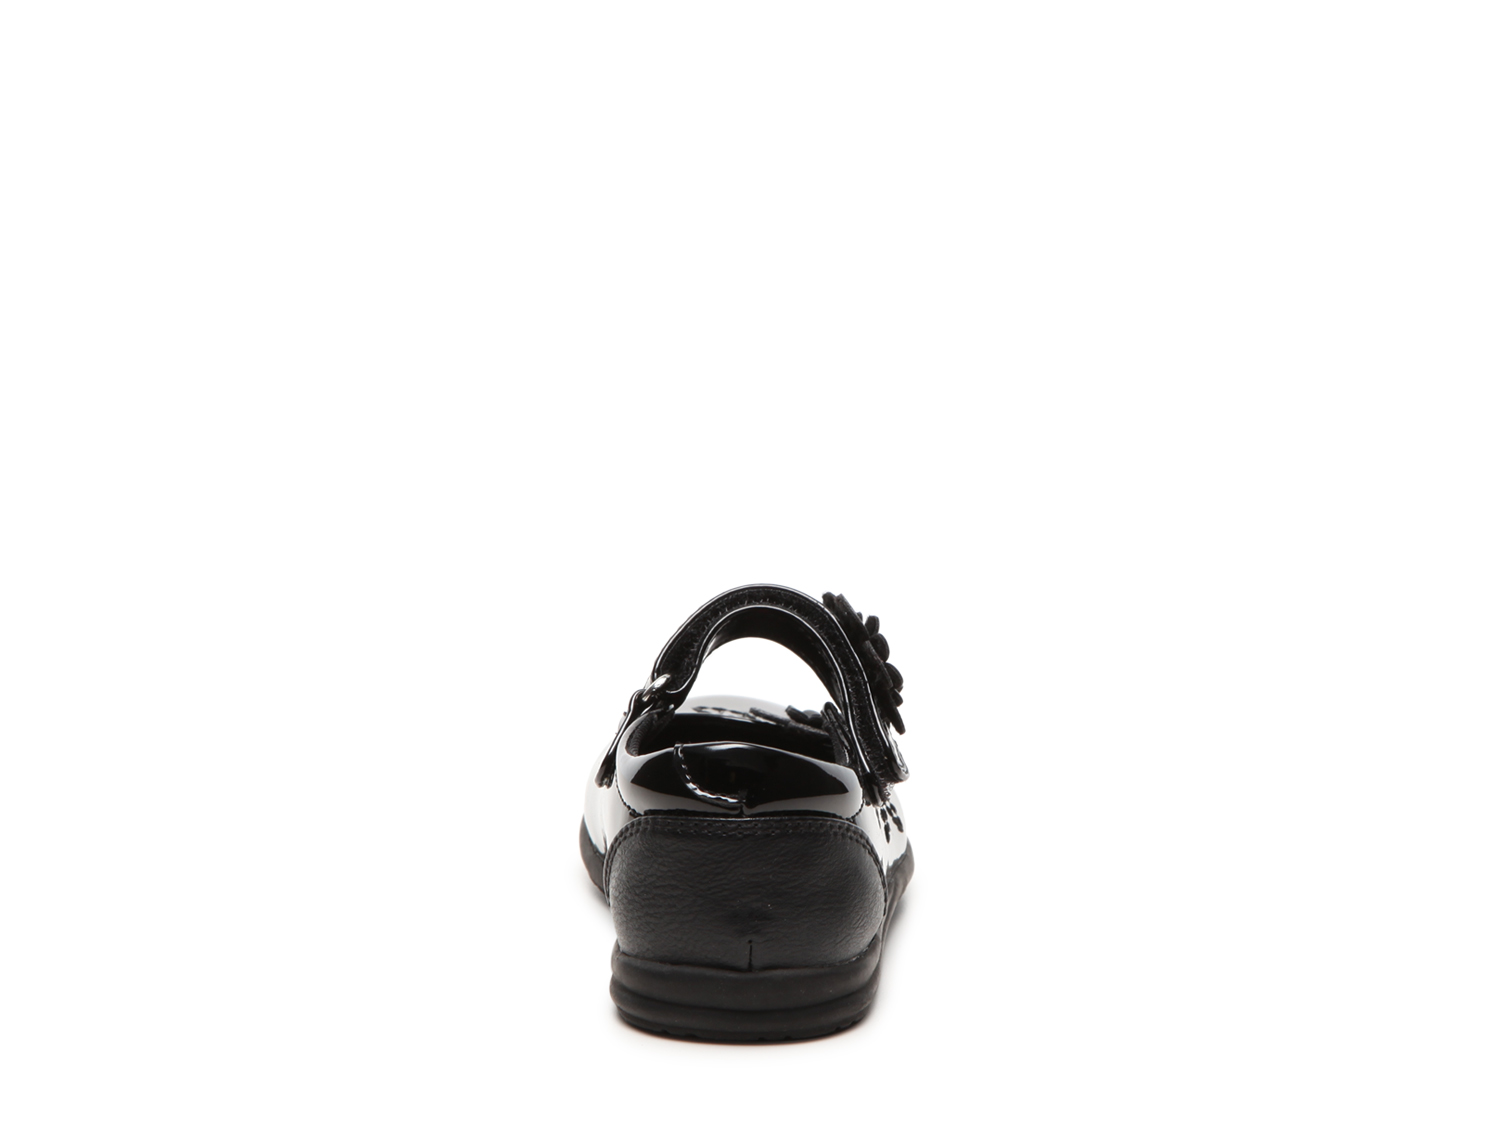 Sizes 6-12 Rachel Girls' Rhea Mary Jane Shoes 